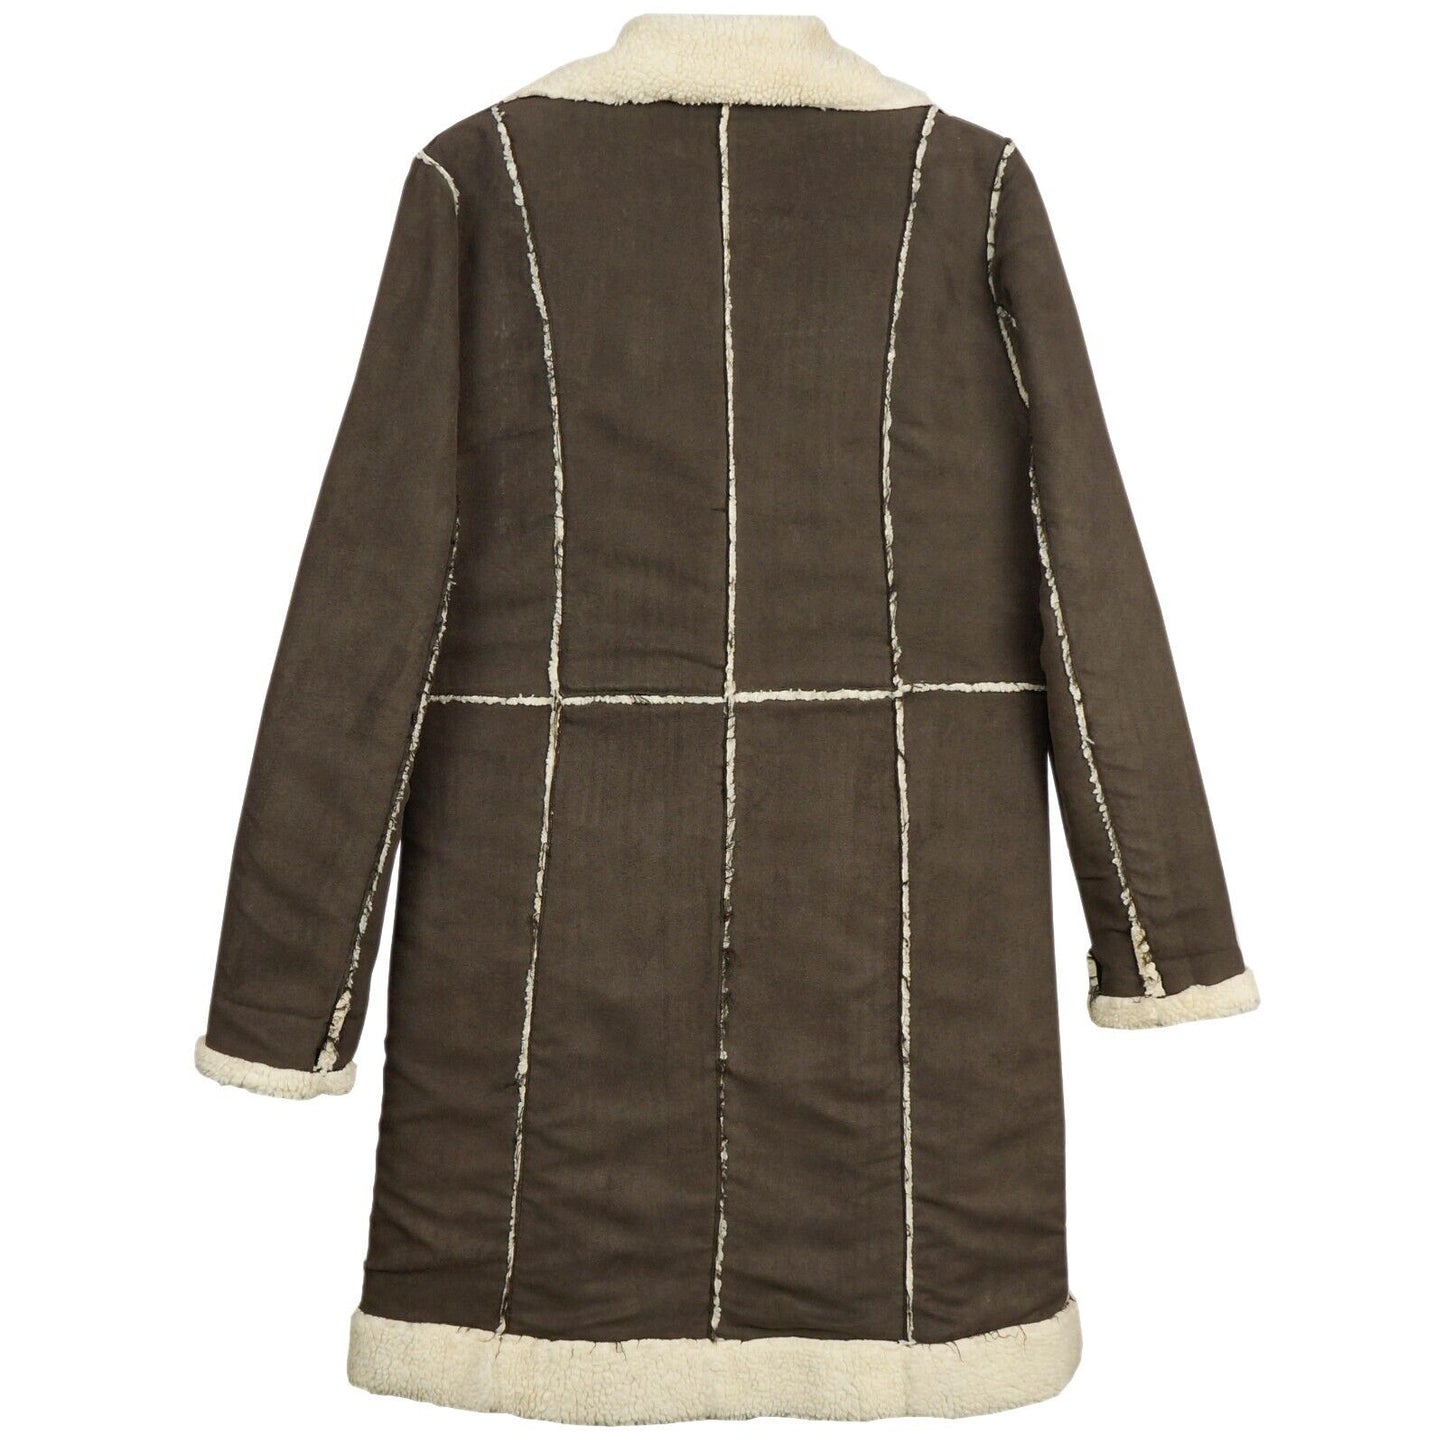 Burberry Prorsum Shearling Coat Brown Jacket